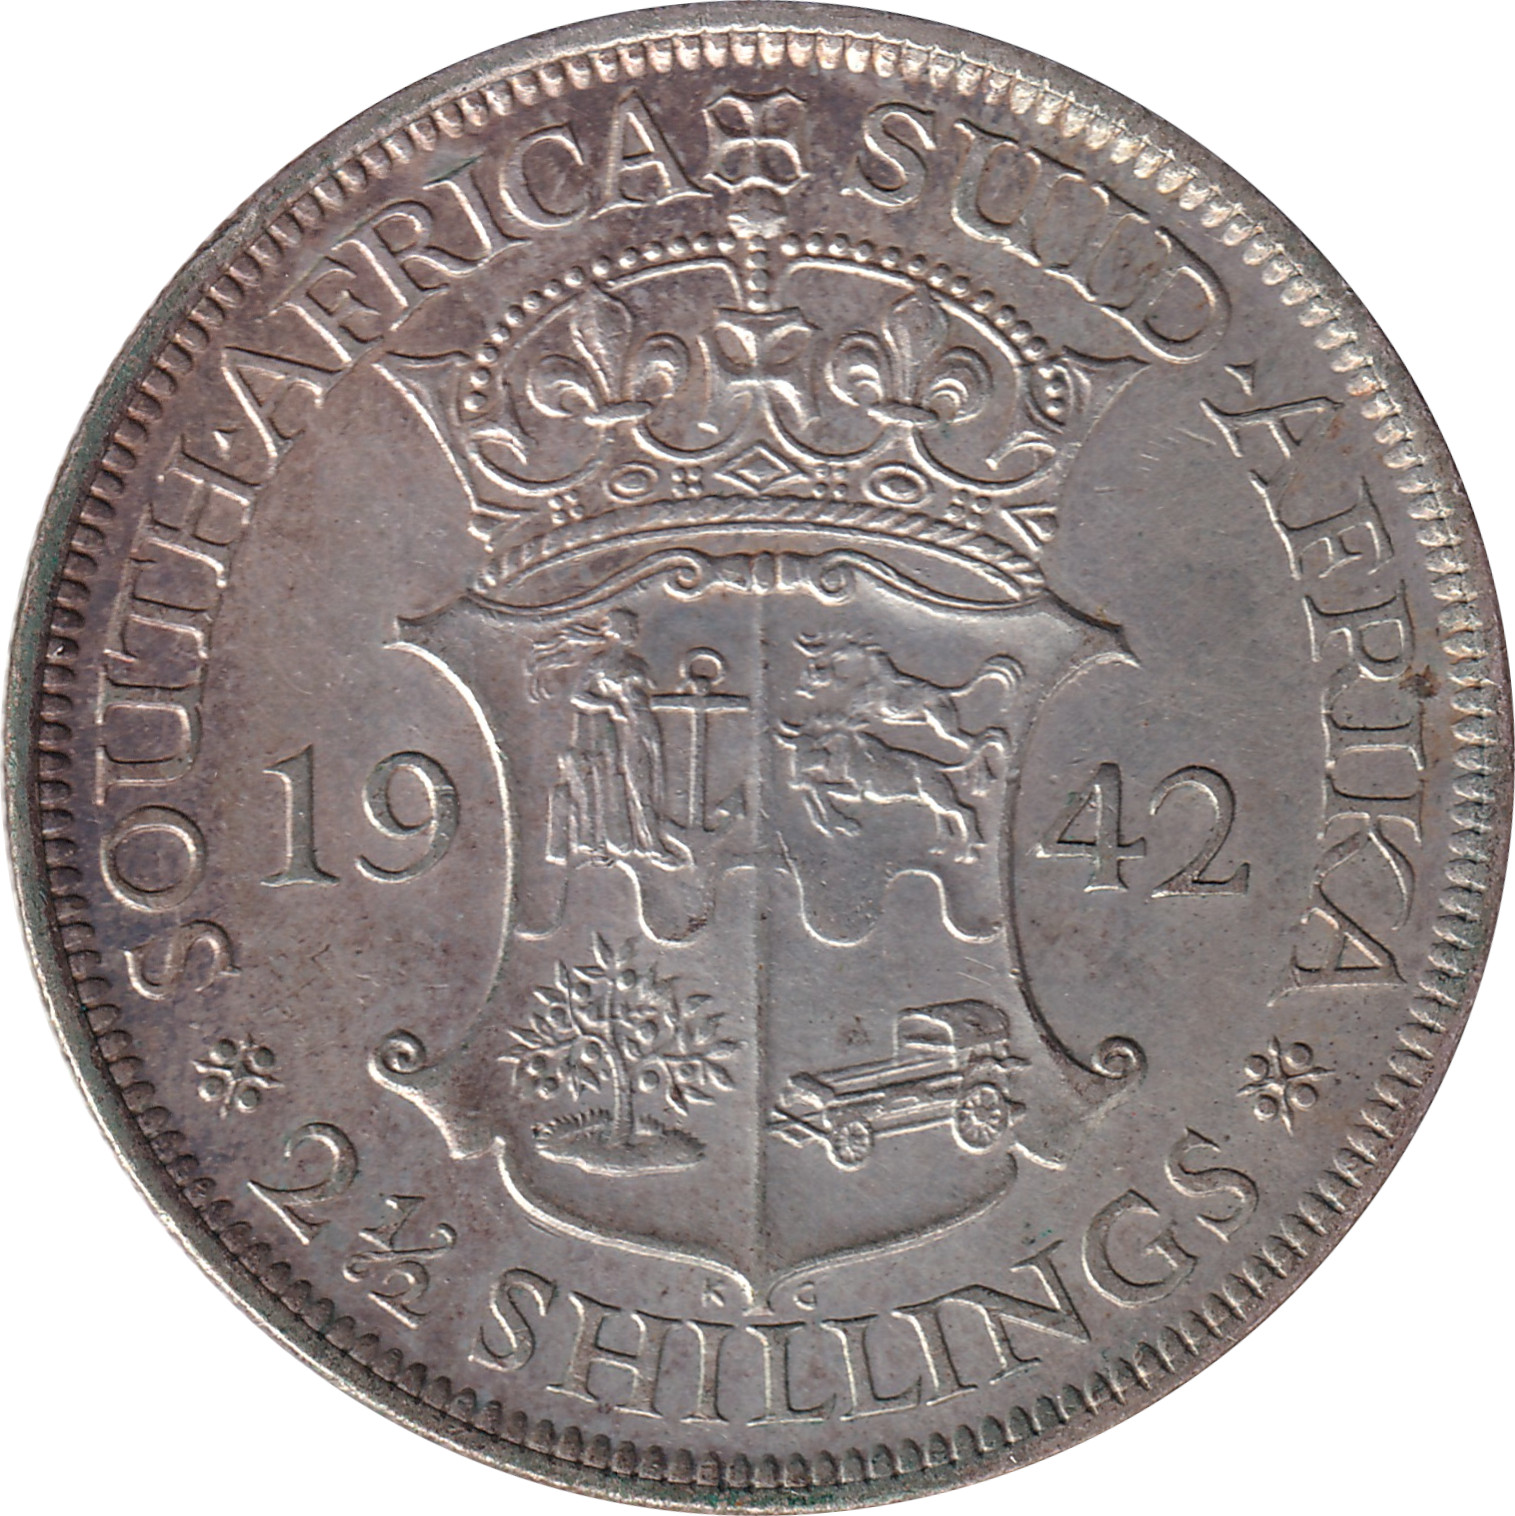 2 1/2 shillings - George VI